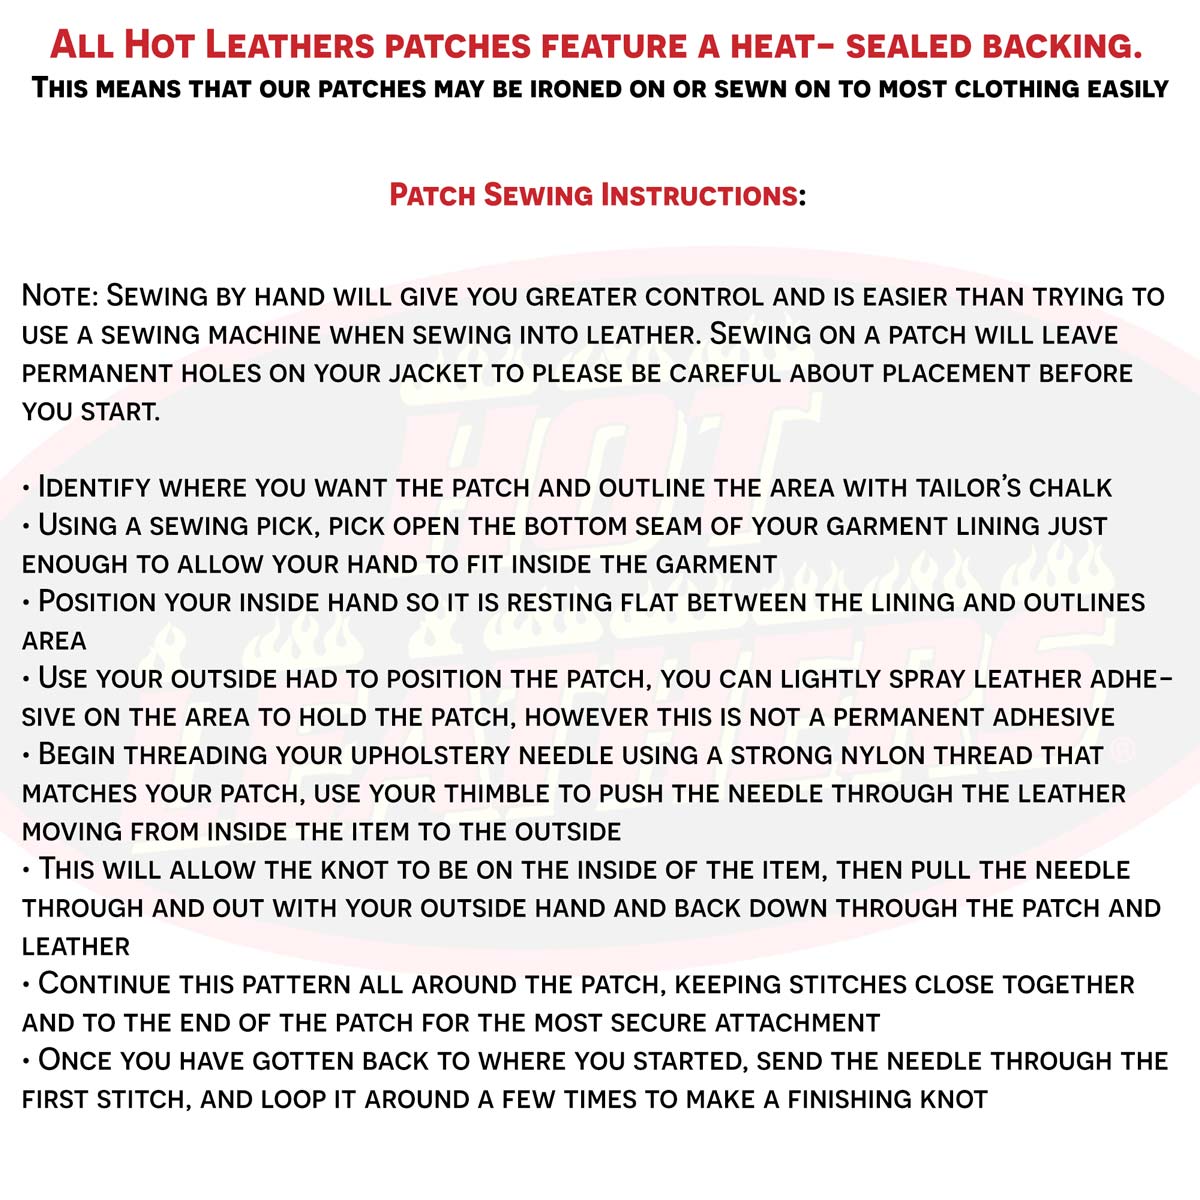 Hot Leathers Work Sucks - Let's Ride 4” X 1” Top Rocker Patch PPM4214